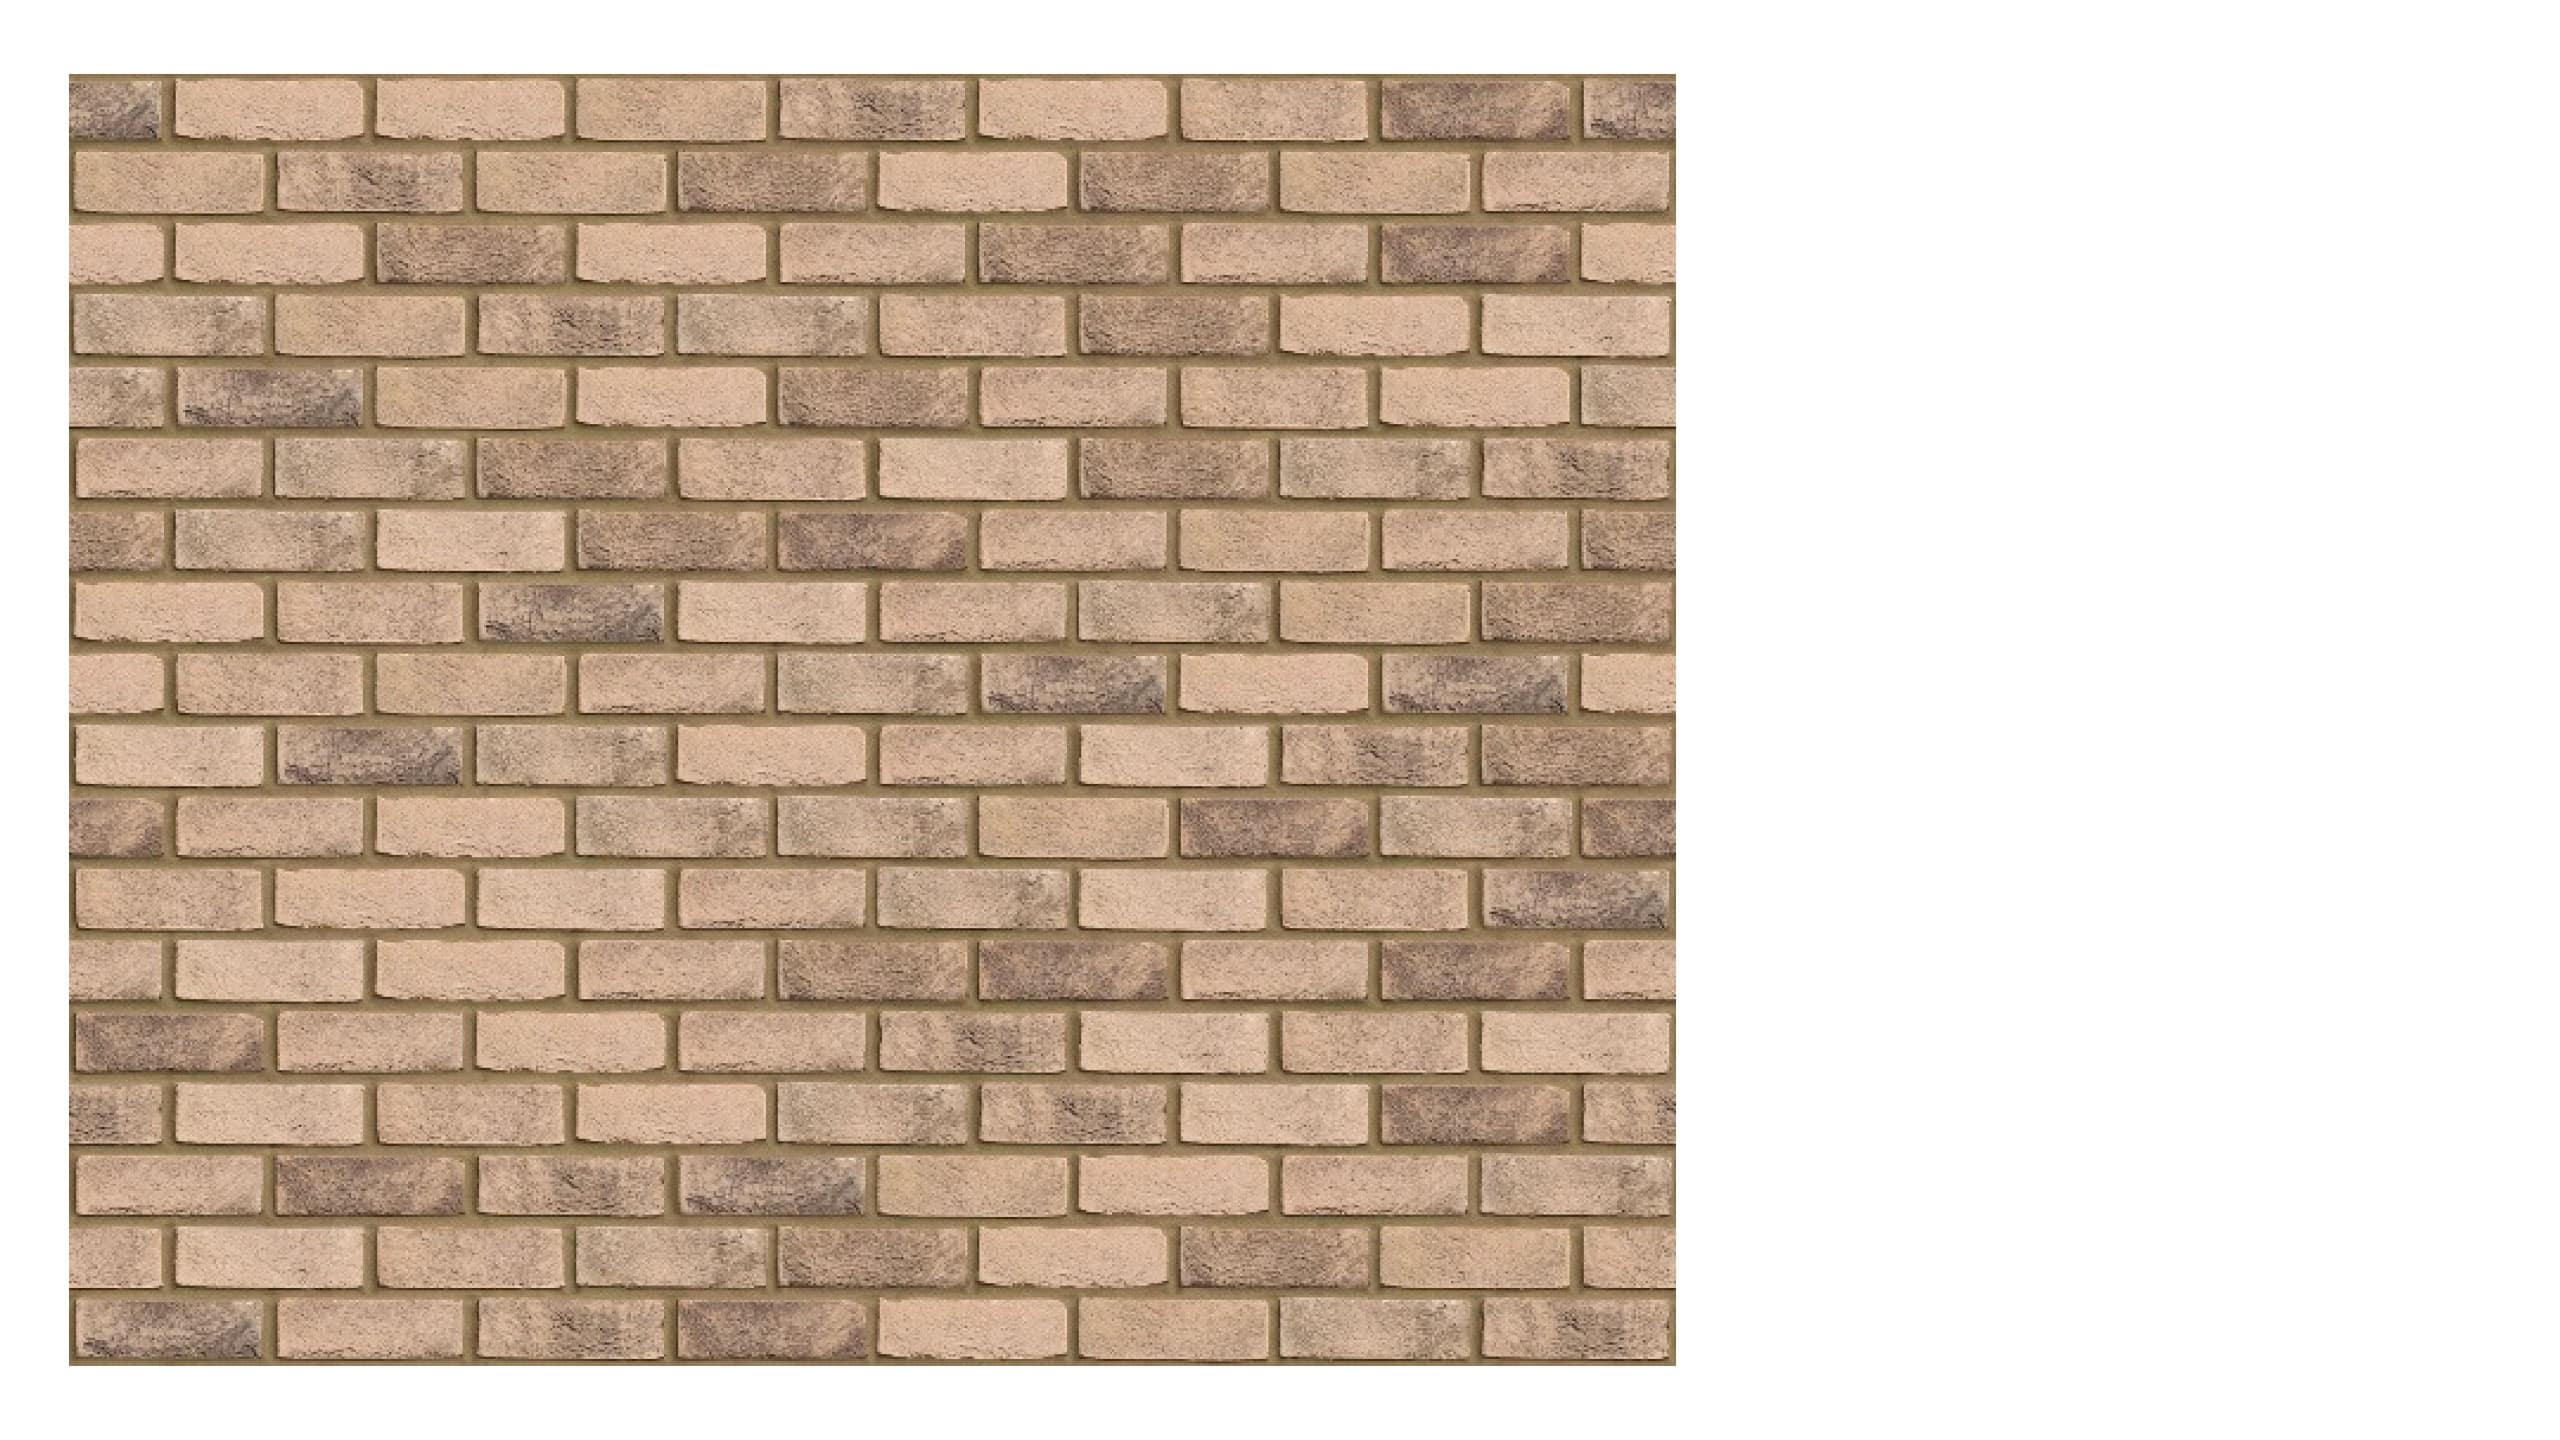 Brick cladding system